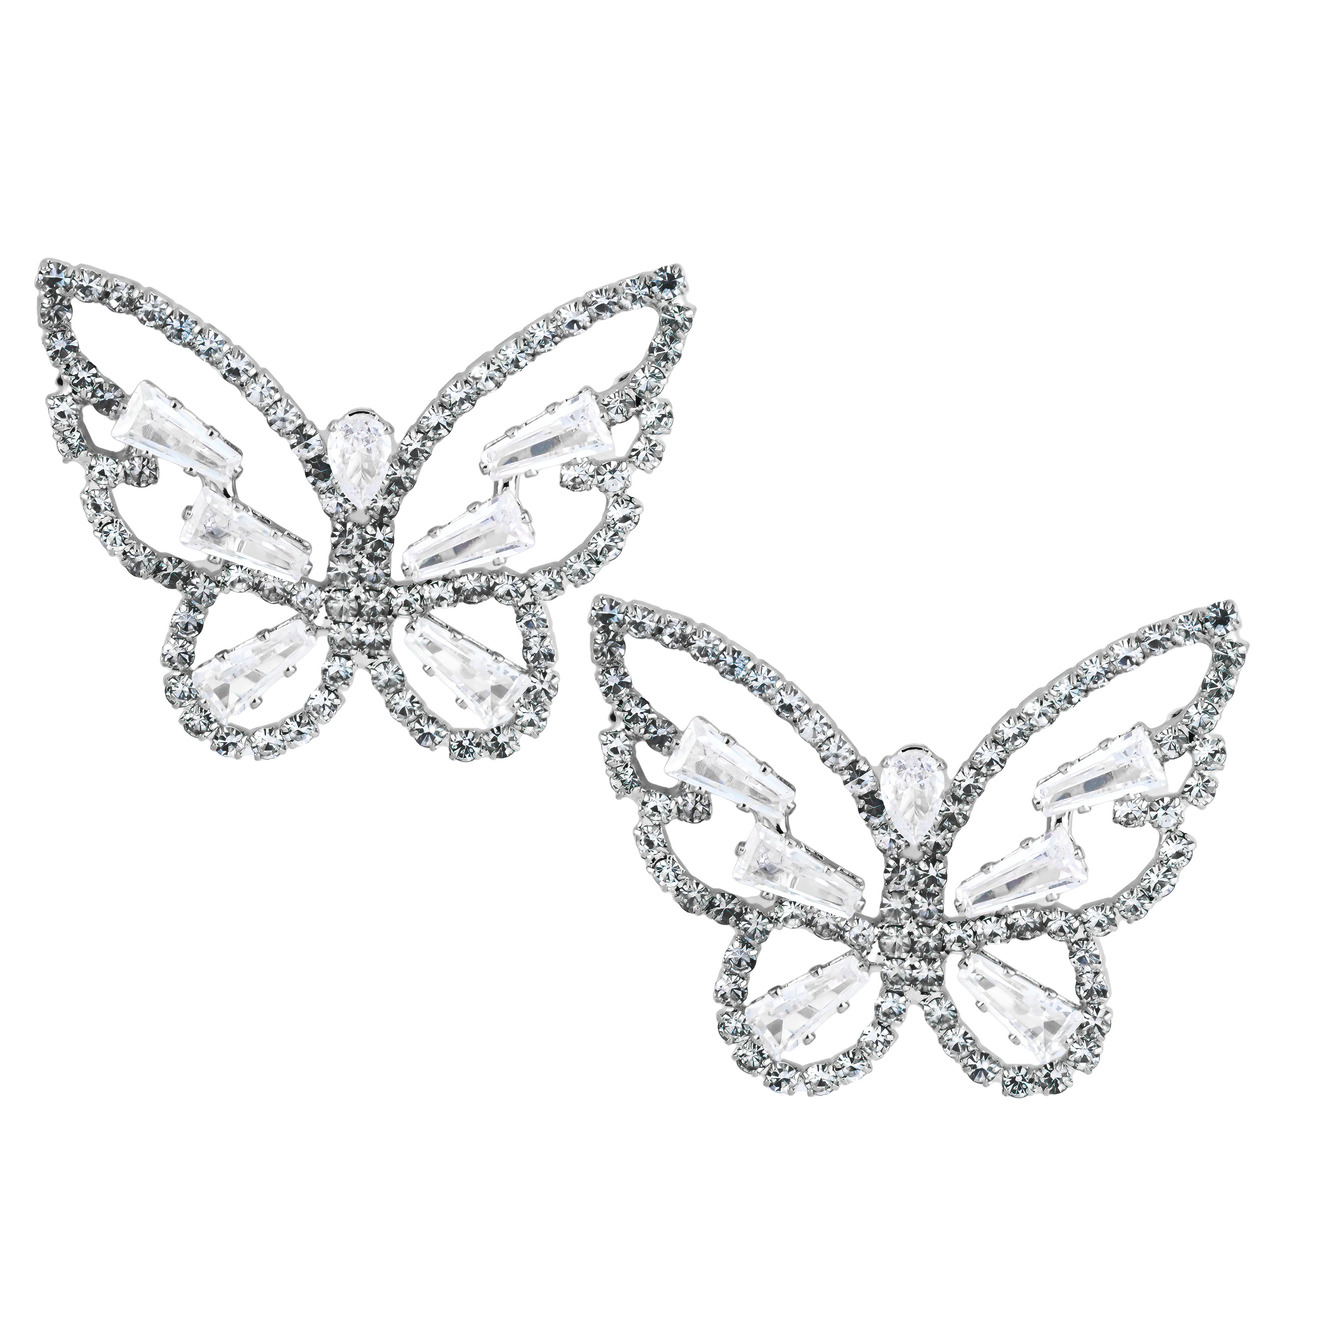 Herald Percy Серебристые серьги-бабочки с кристаллами herald percy серебристые серьги стрелки с кристаллами